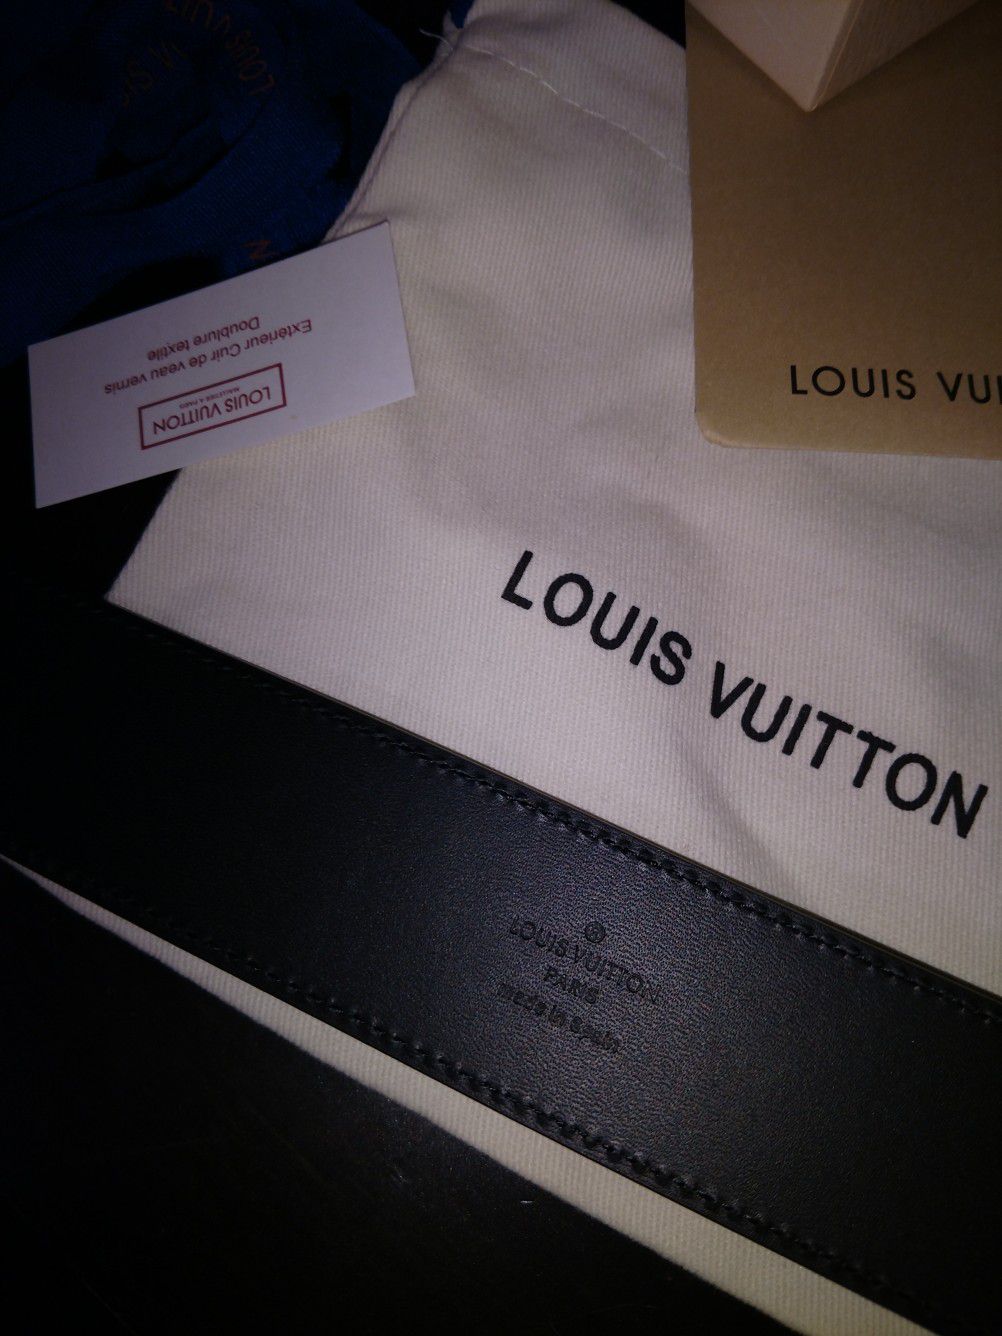 KOMEHYO, LOUIS VUITTON LOUIS VUITTON BELT, LOUIS VUITTON, Men's  Fashion, Fashion Goods, Belt, Damie Grafit